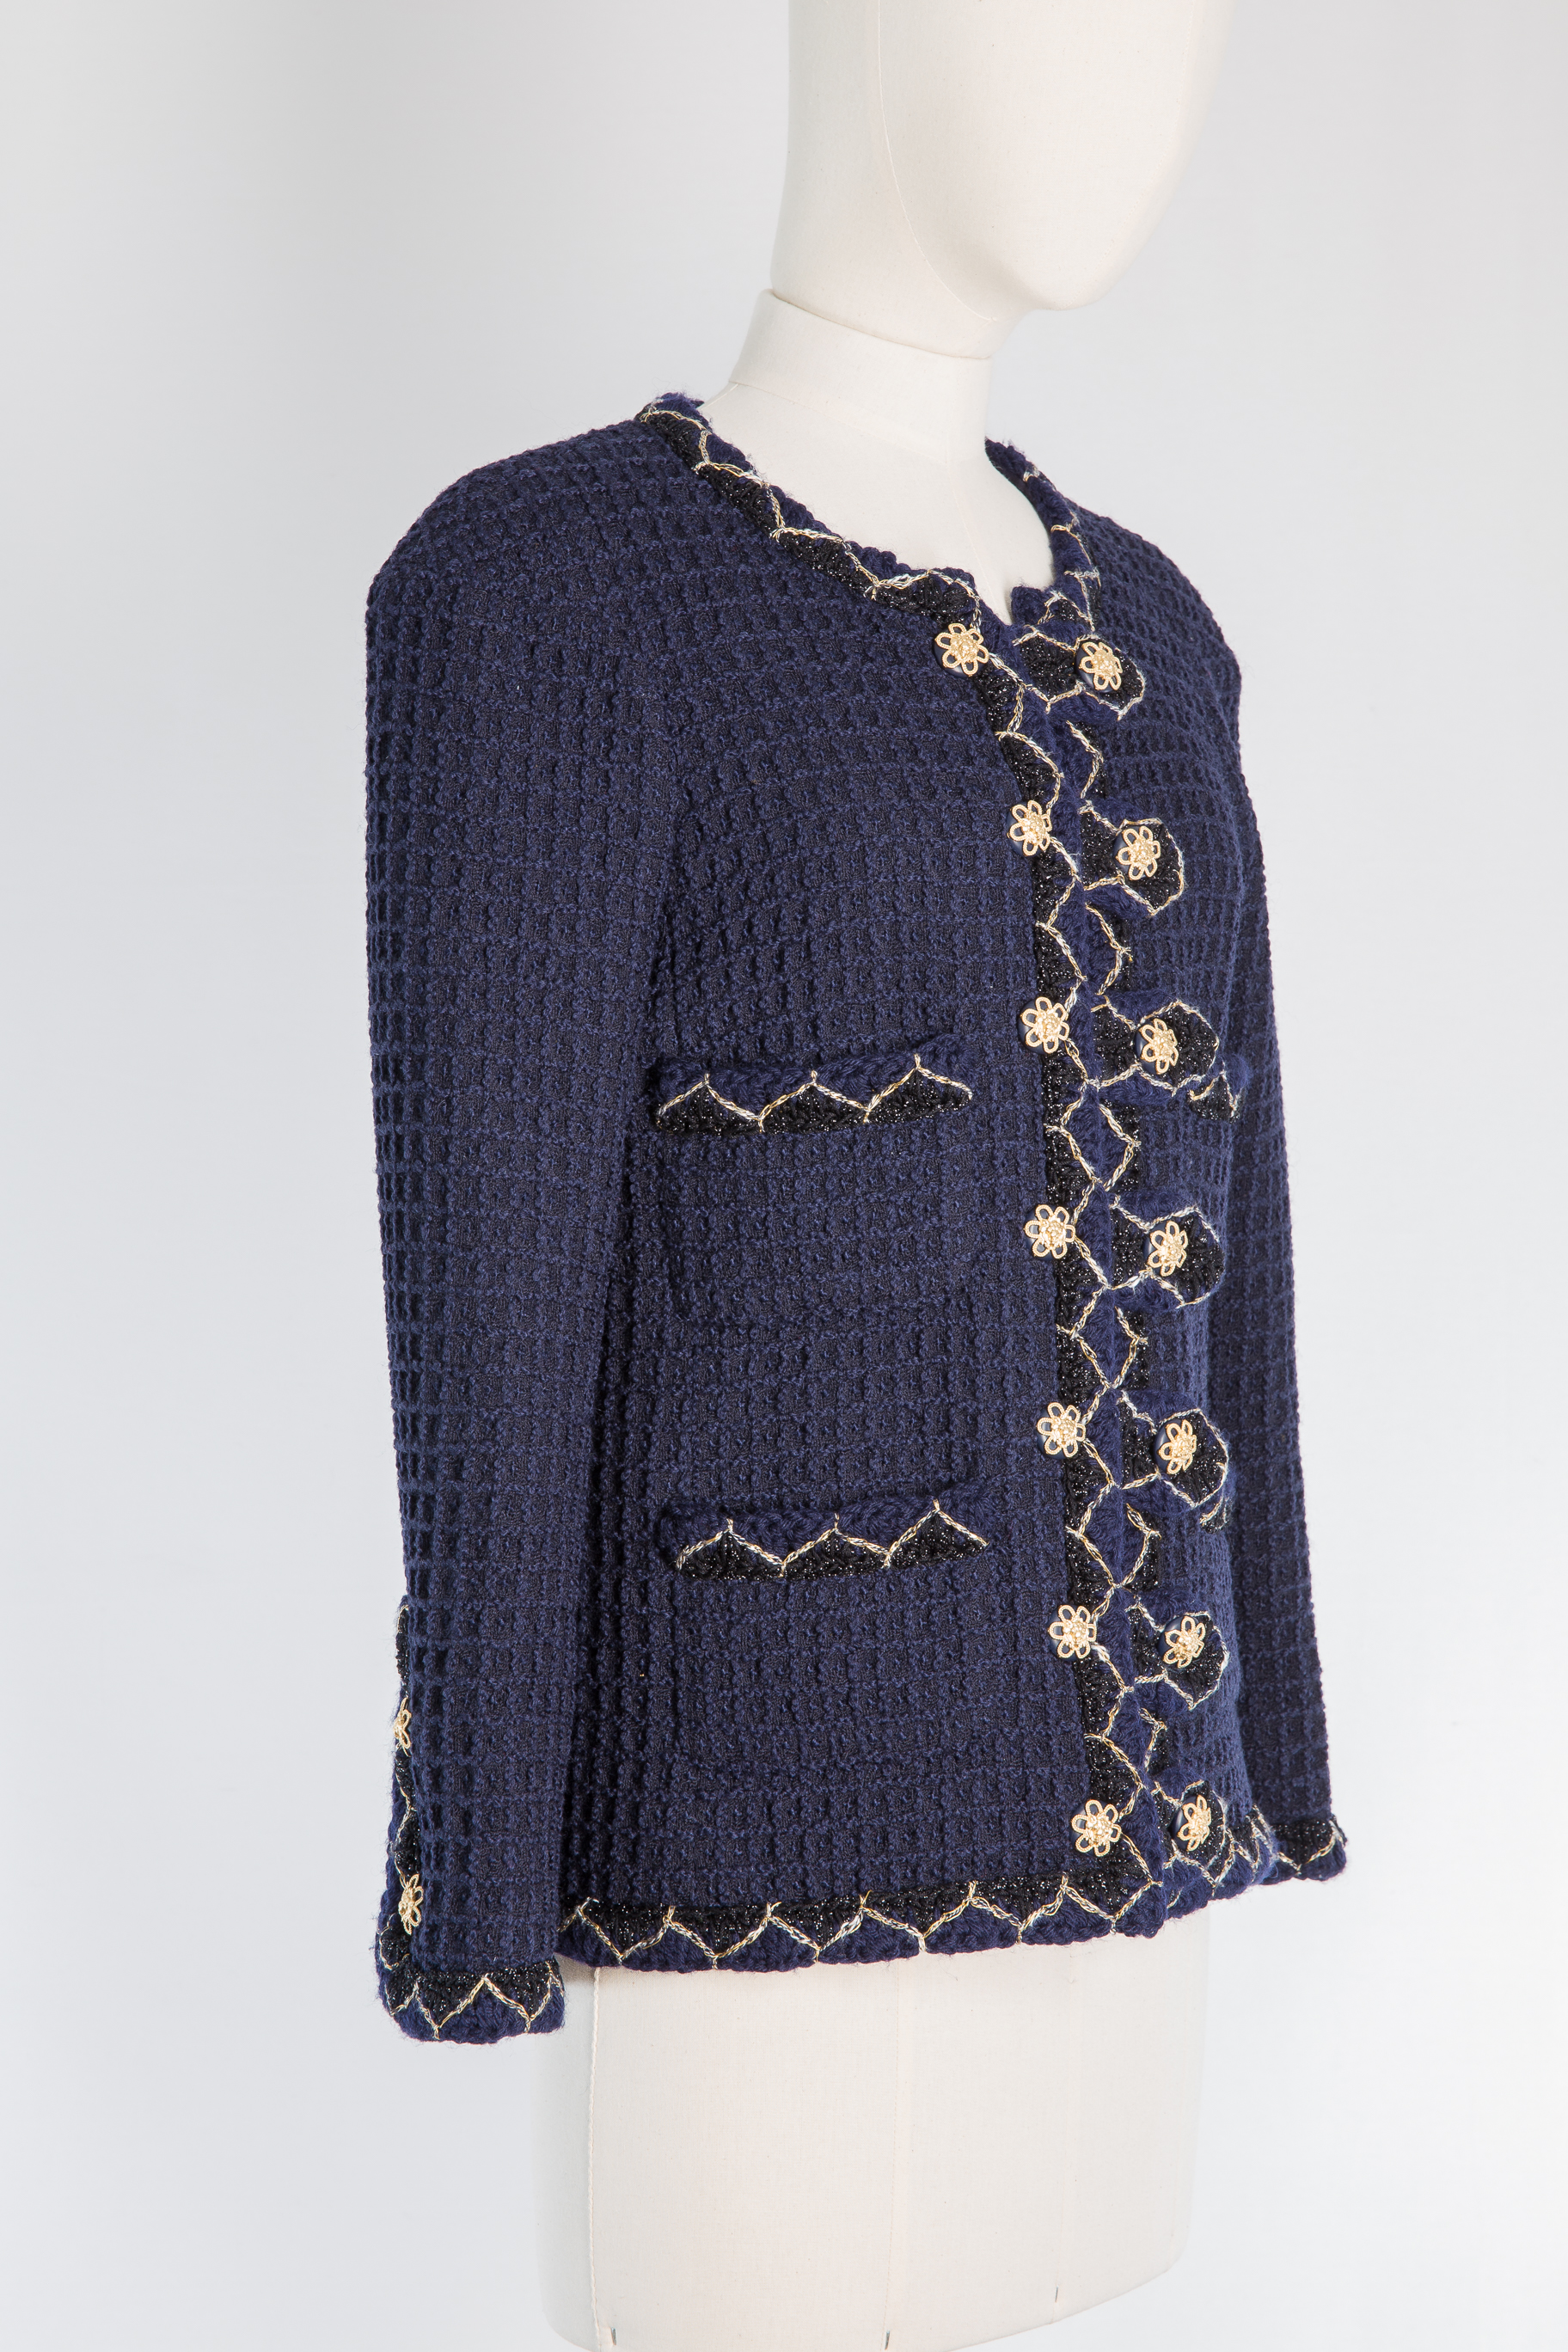 Chanel Tweed Jacket, FR36 - Huntessa Luxury Online Consignment Boutique